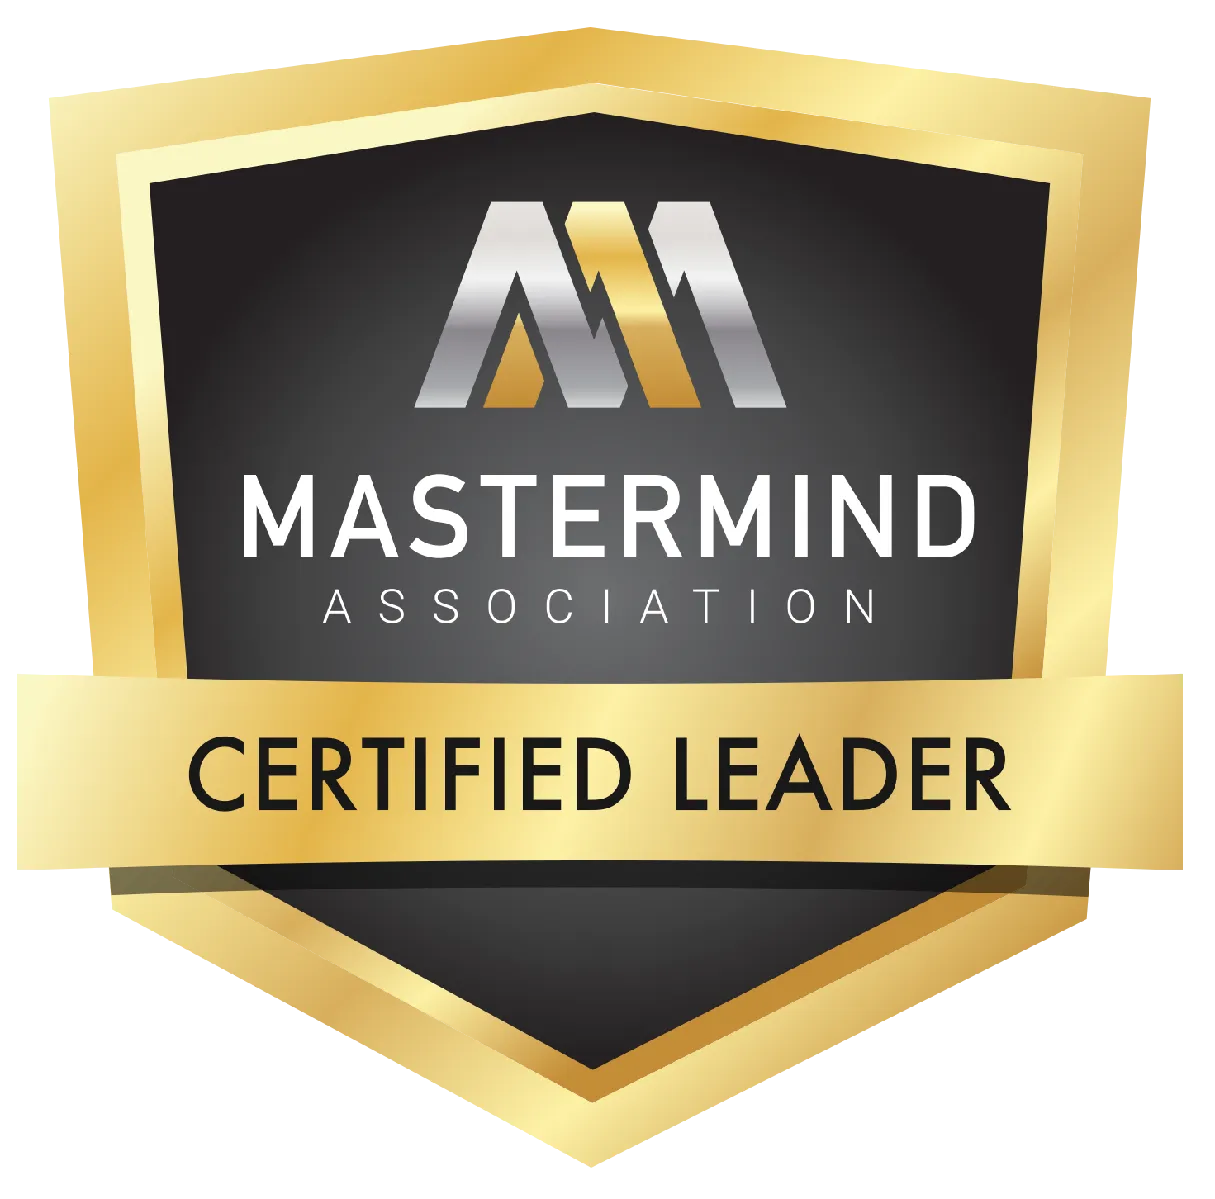 Mastermind Association - Become A Mastermind Leader